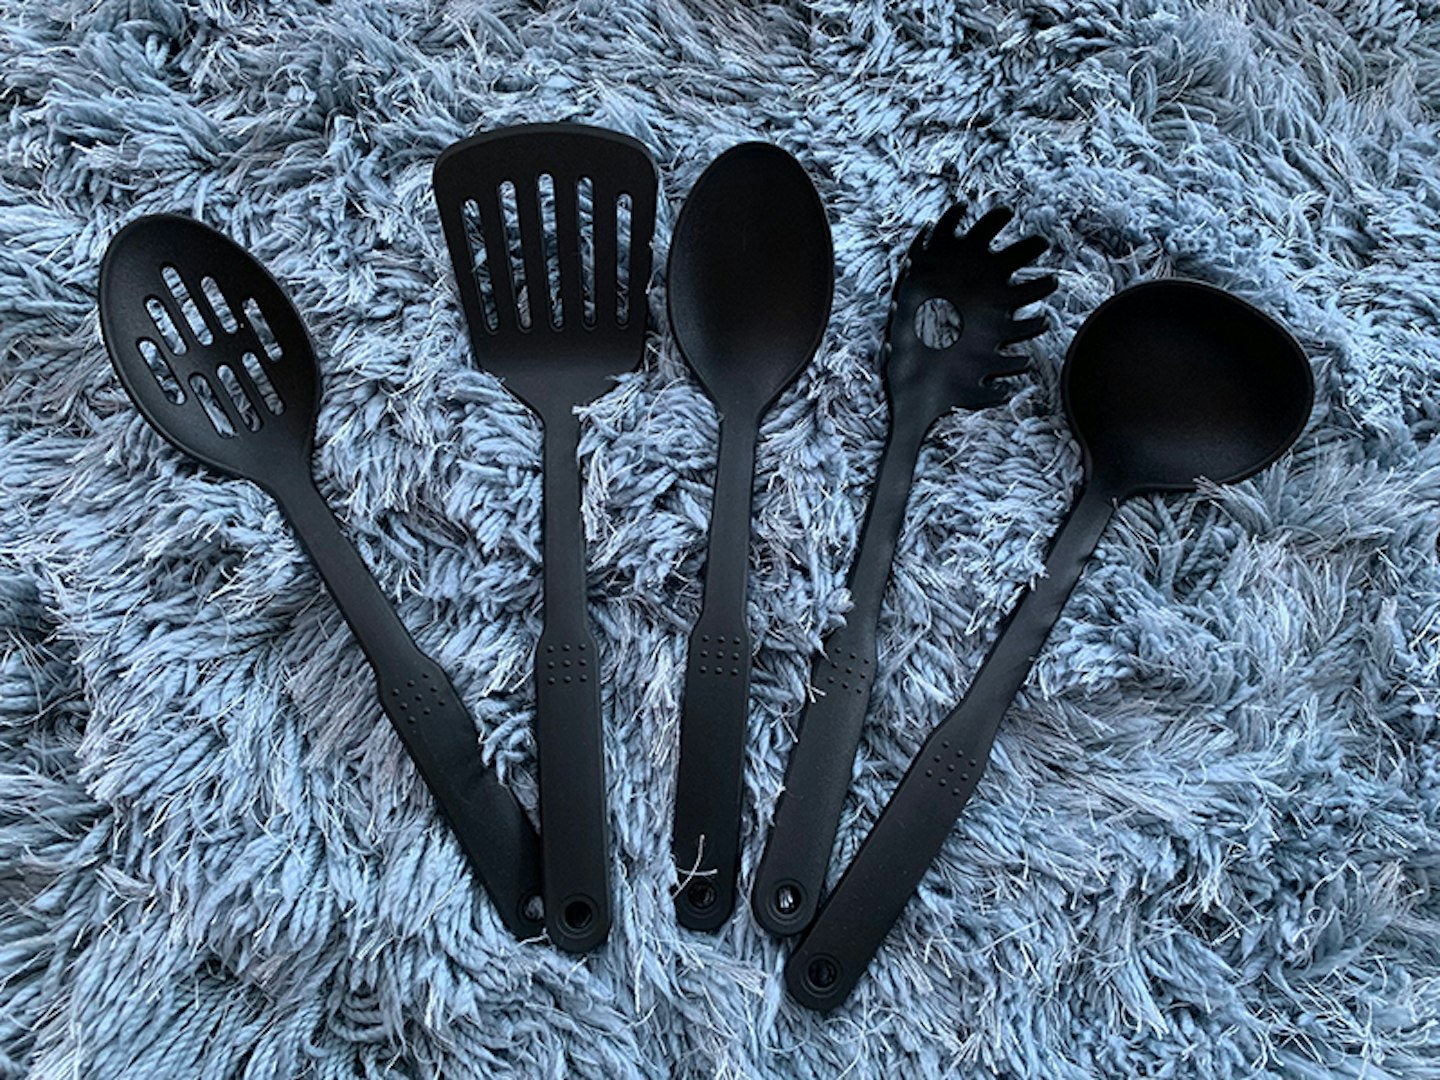 Basics Non-Stick Cookware Set, Pots, Pans and Utensils - 15